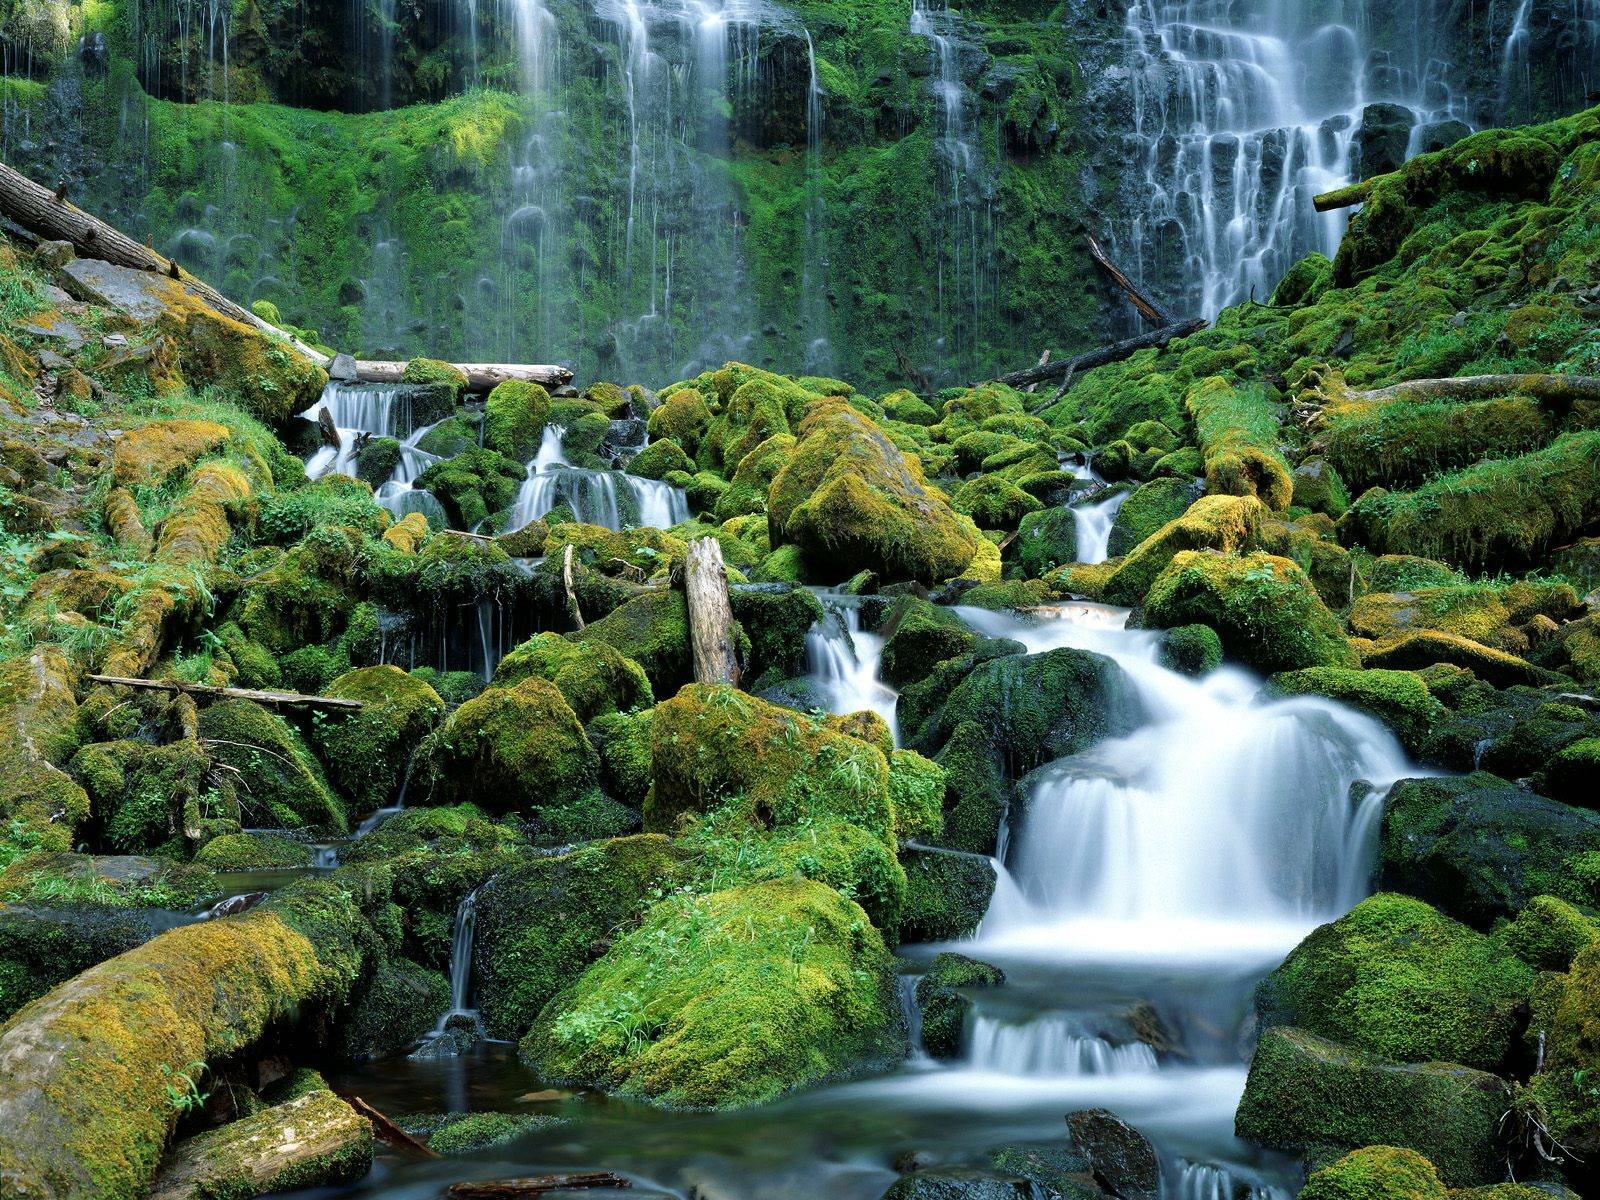 Nature Waterfall Wallpaper